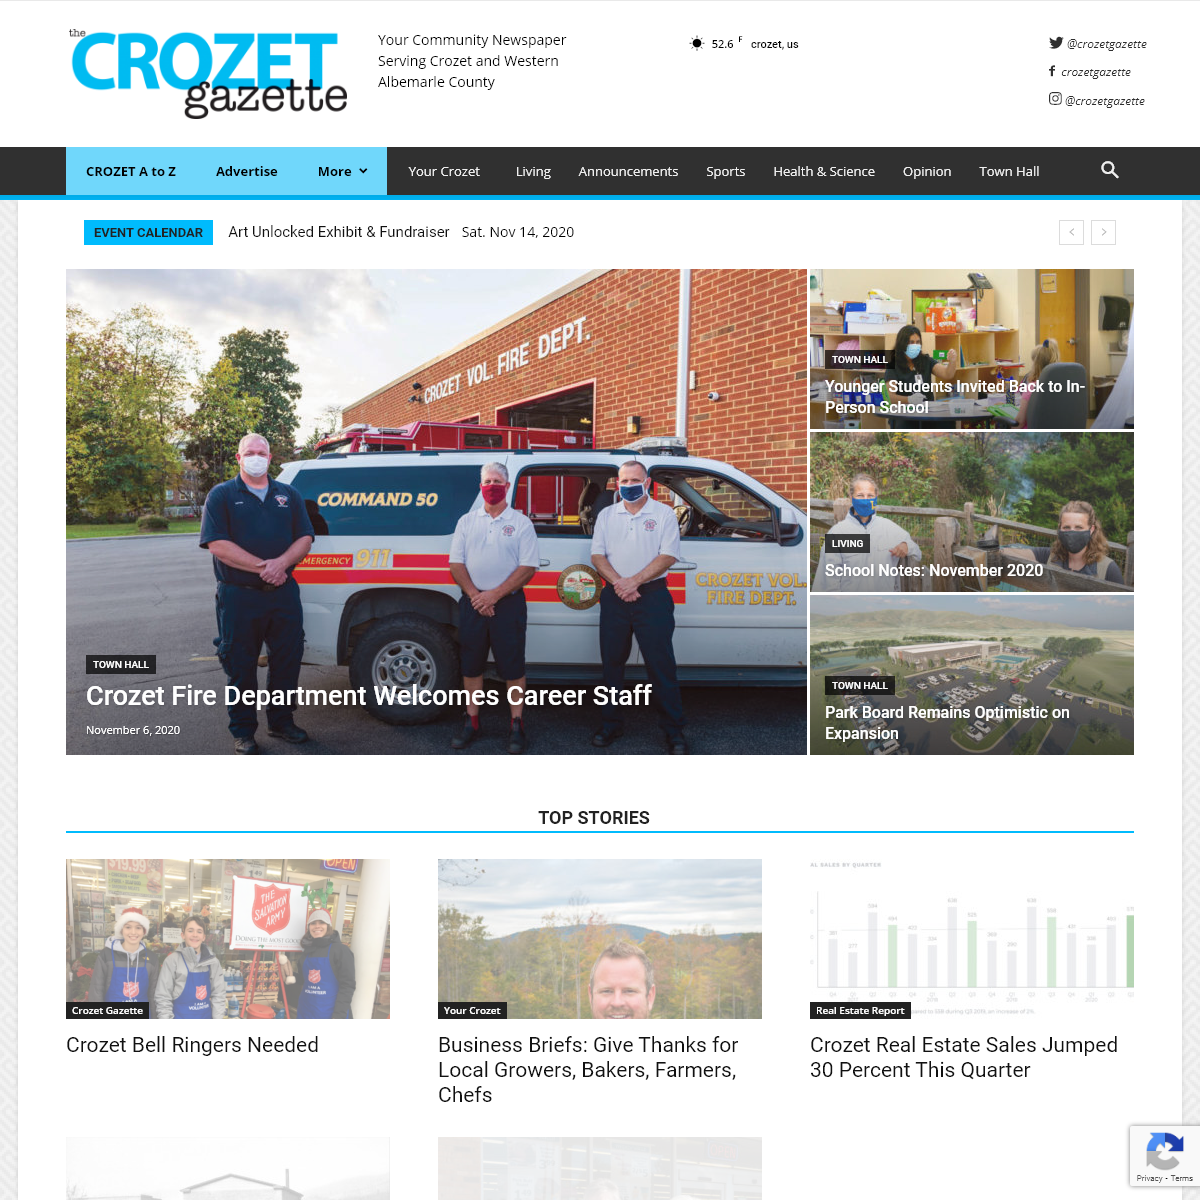 Crozet Gazette - A community newspaper serving western Albemarle County